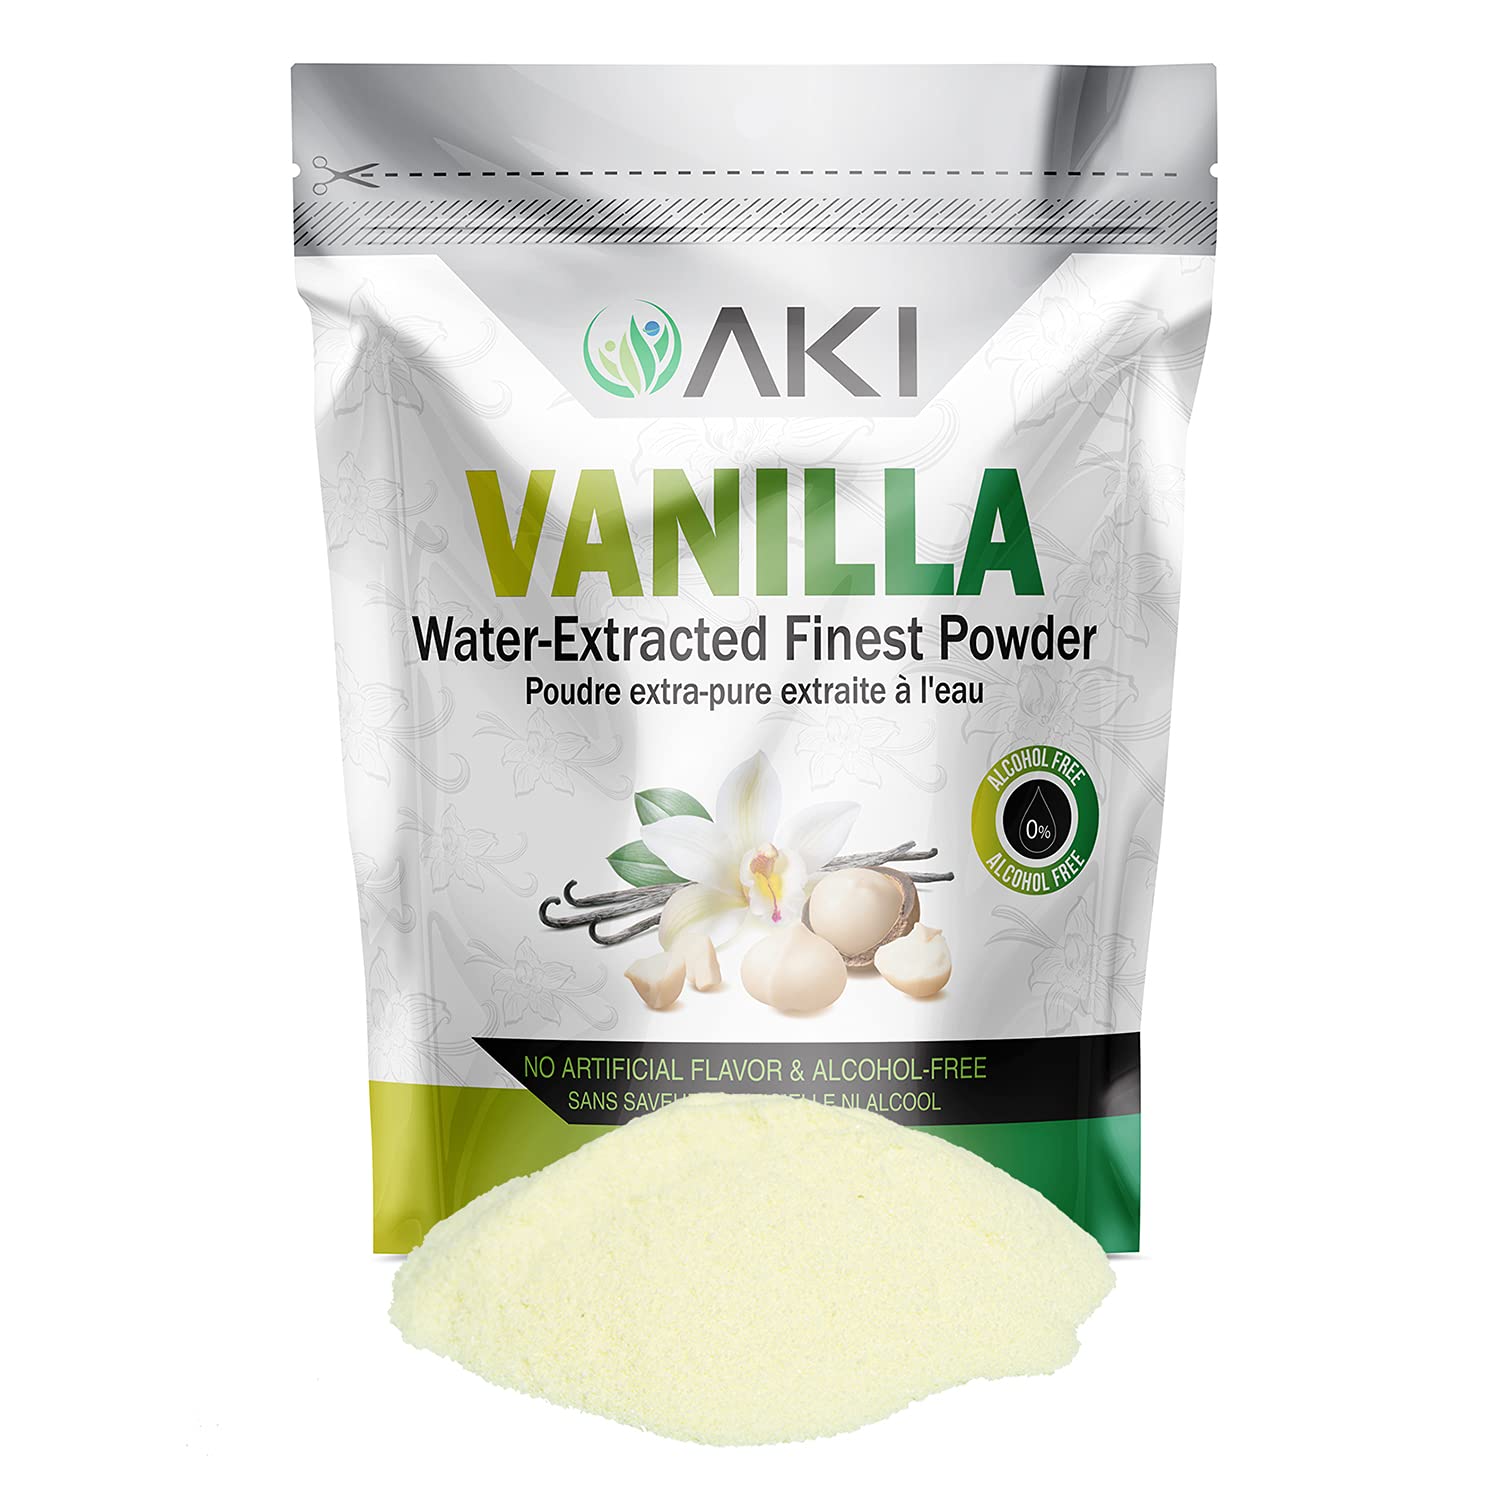 Aki vanilla powder